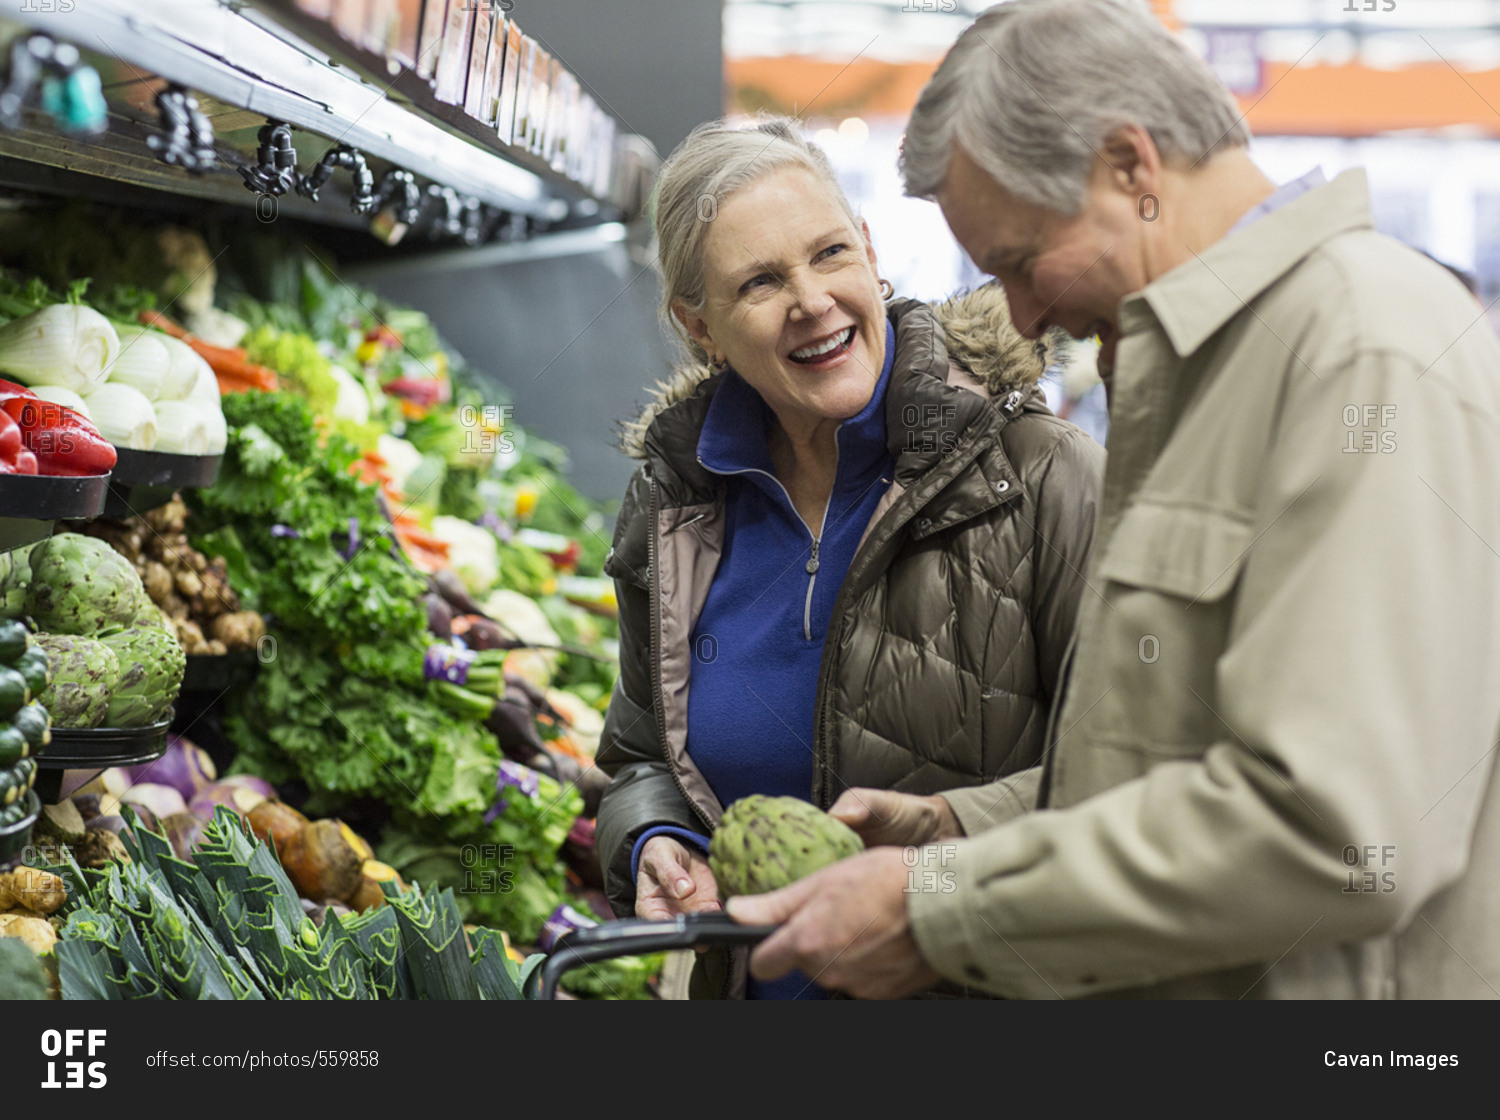 Smiling senior couple shopping for vegetables at supermarket